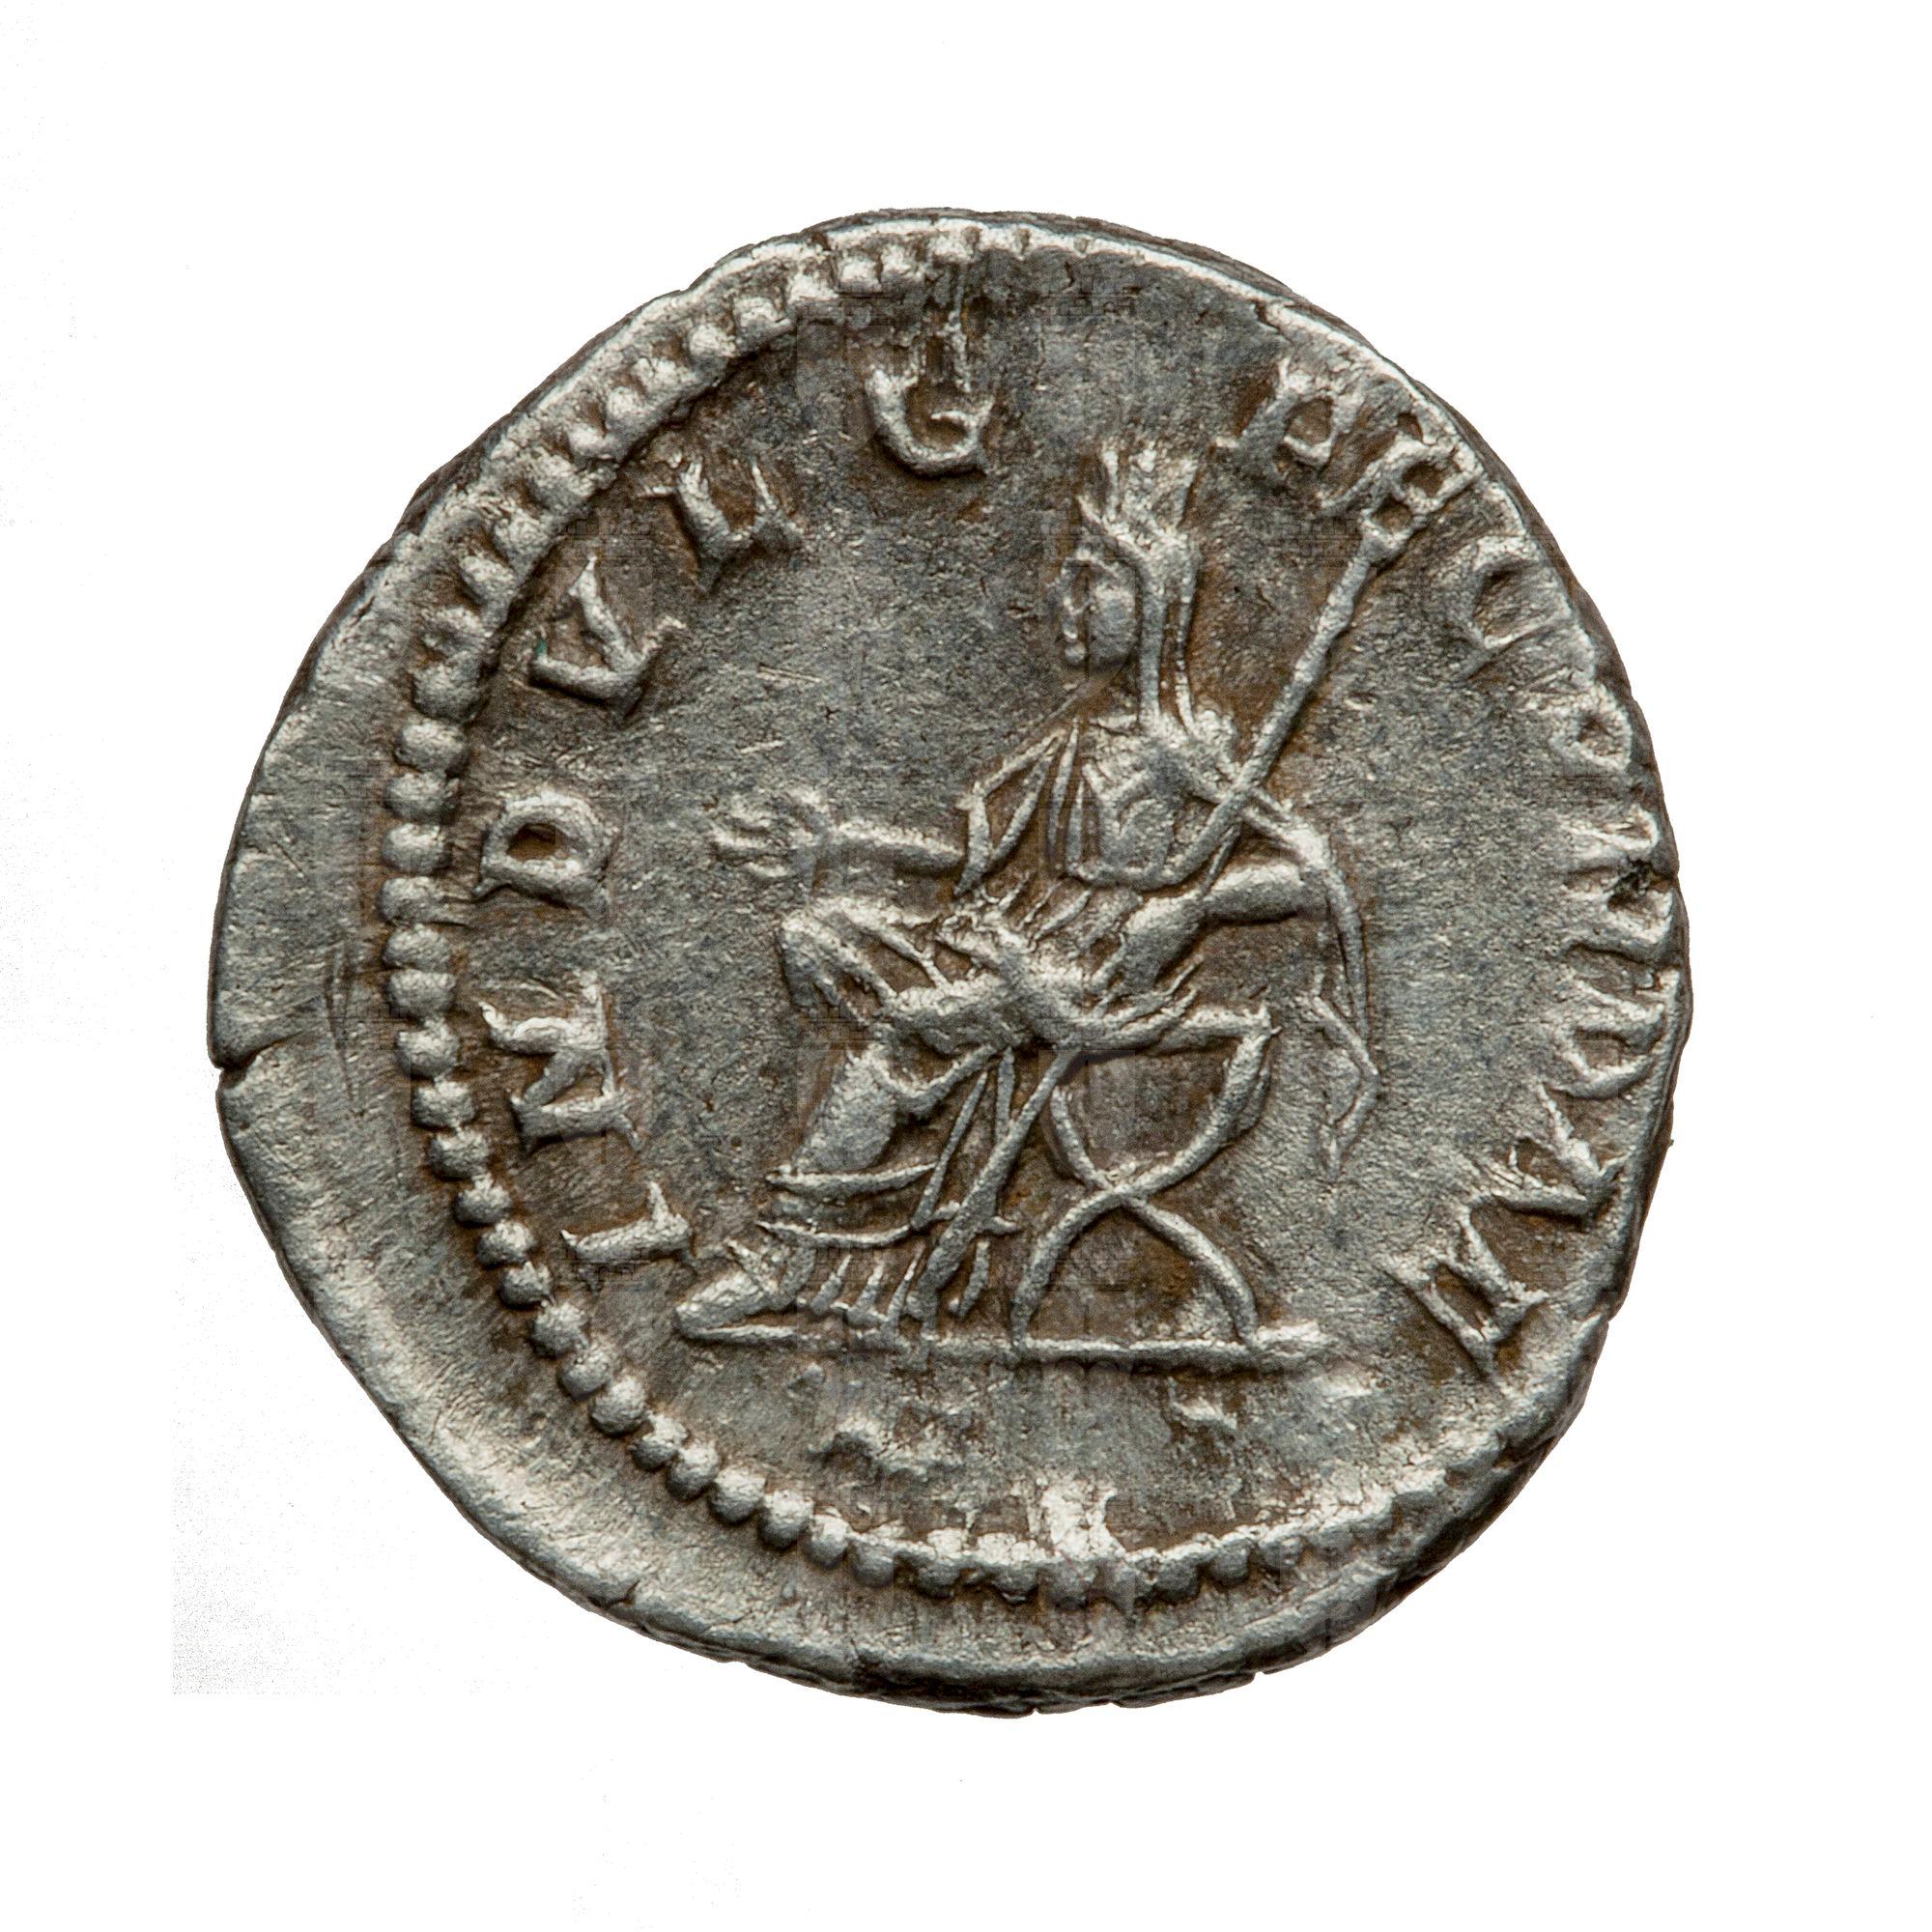 https://catalogomusei.comune.trieste.it/samira/resource/image/reperti-archeologici/Roma 1243 R Caracalla.jpg?token=6514efba27f60